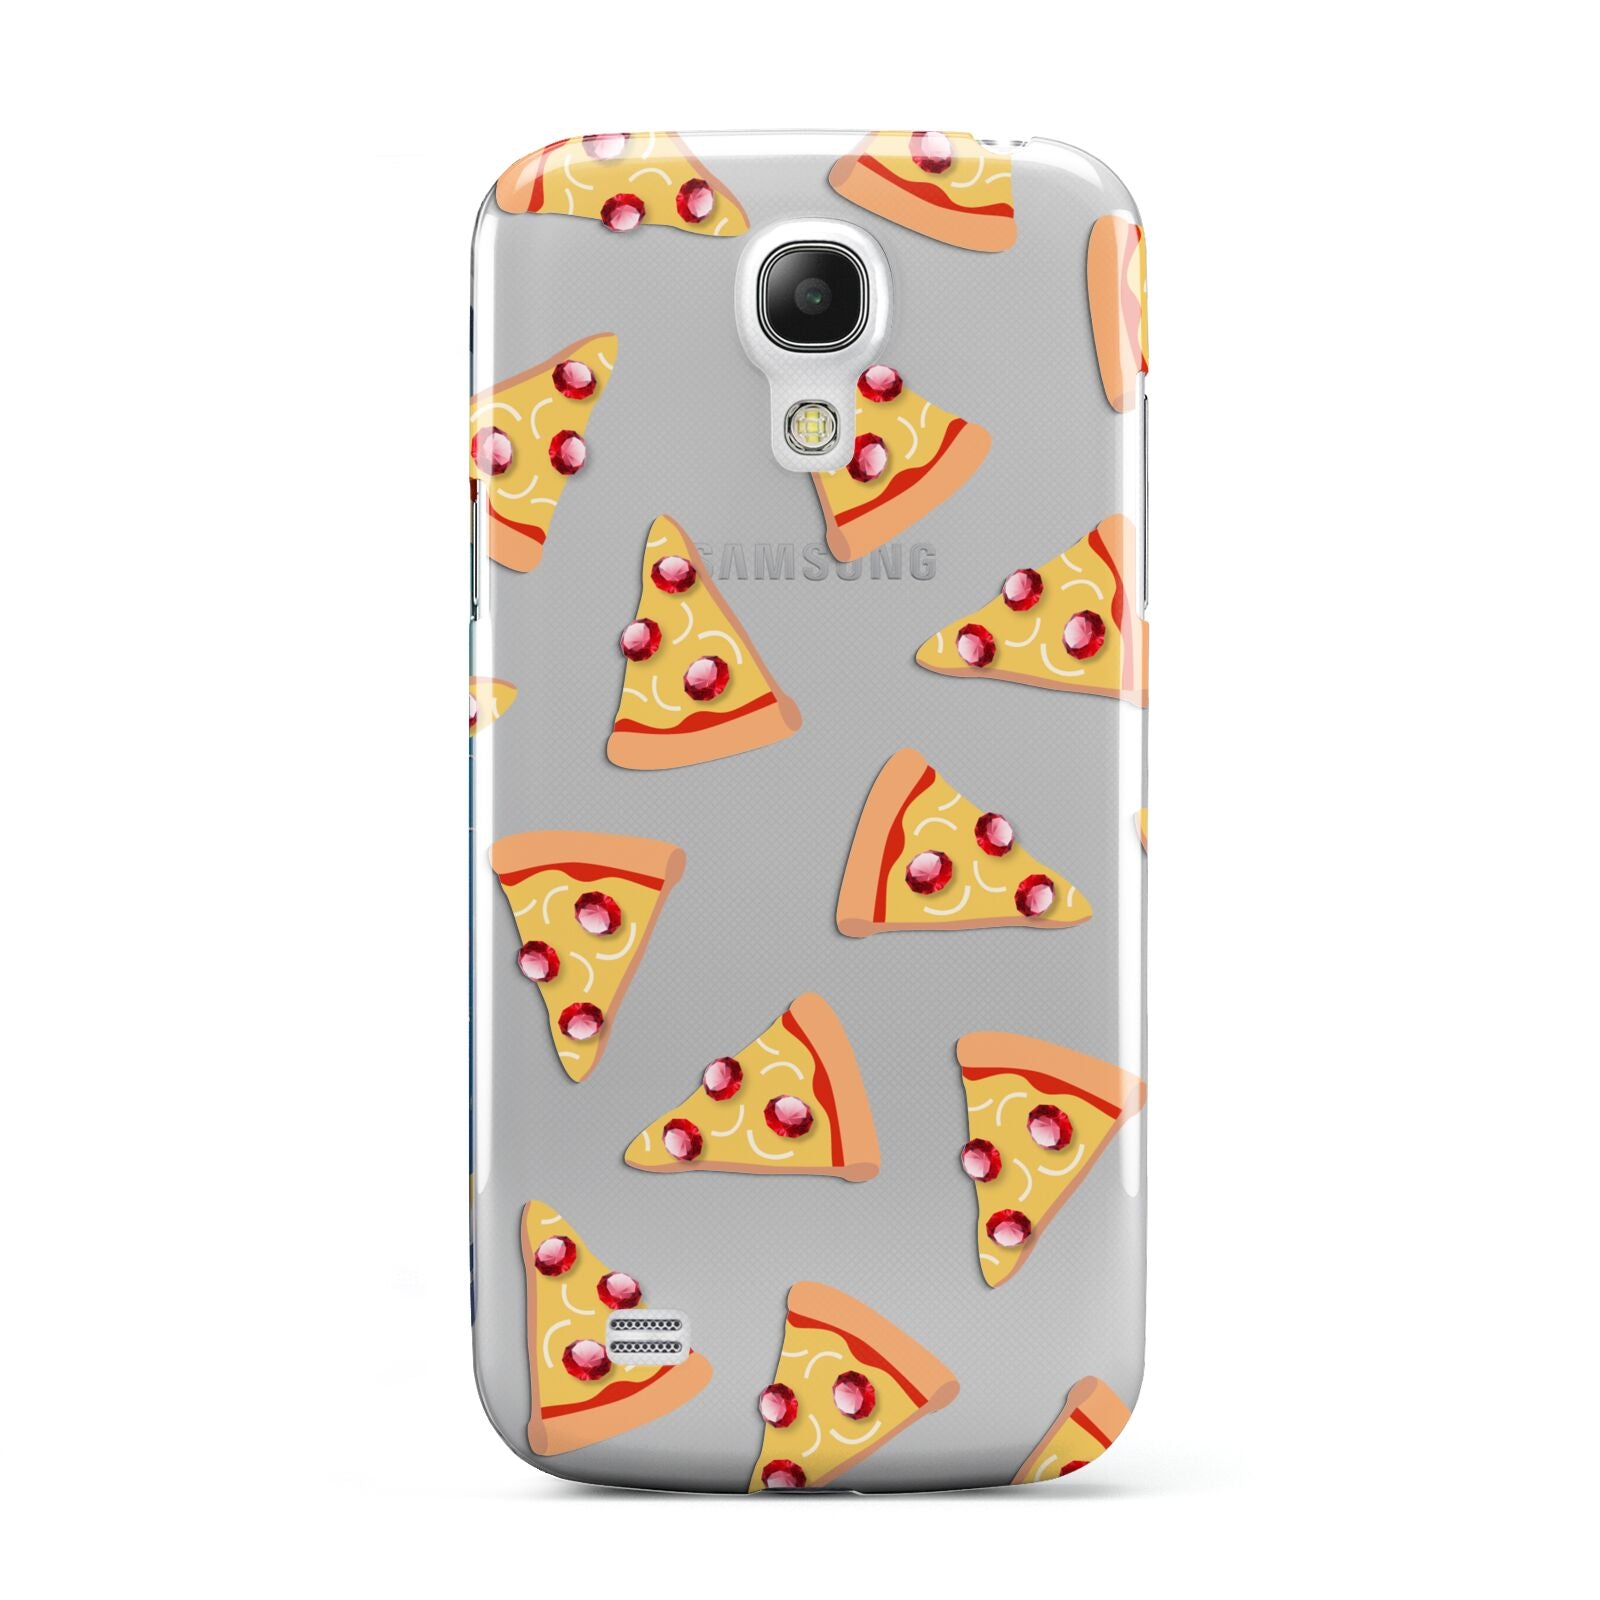 Rubies on Cartoon Pizza Slices Samsung Galaxy S4 Mini Case